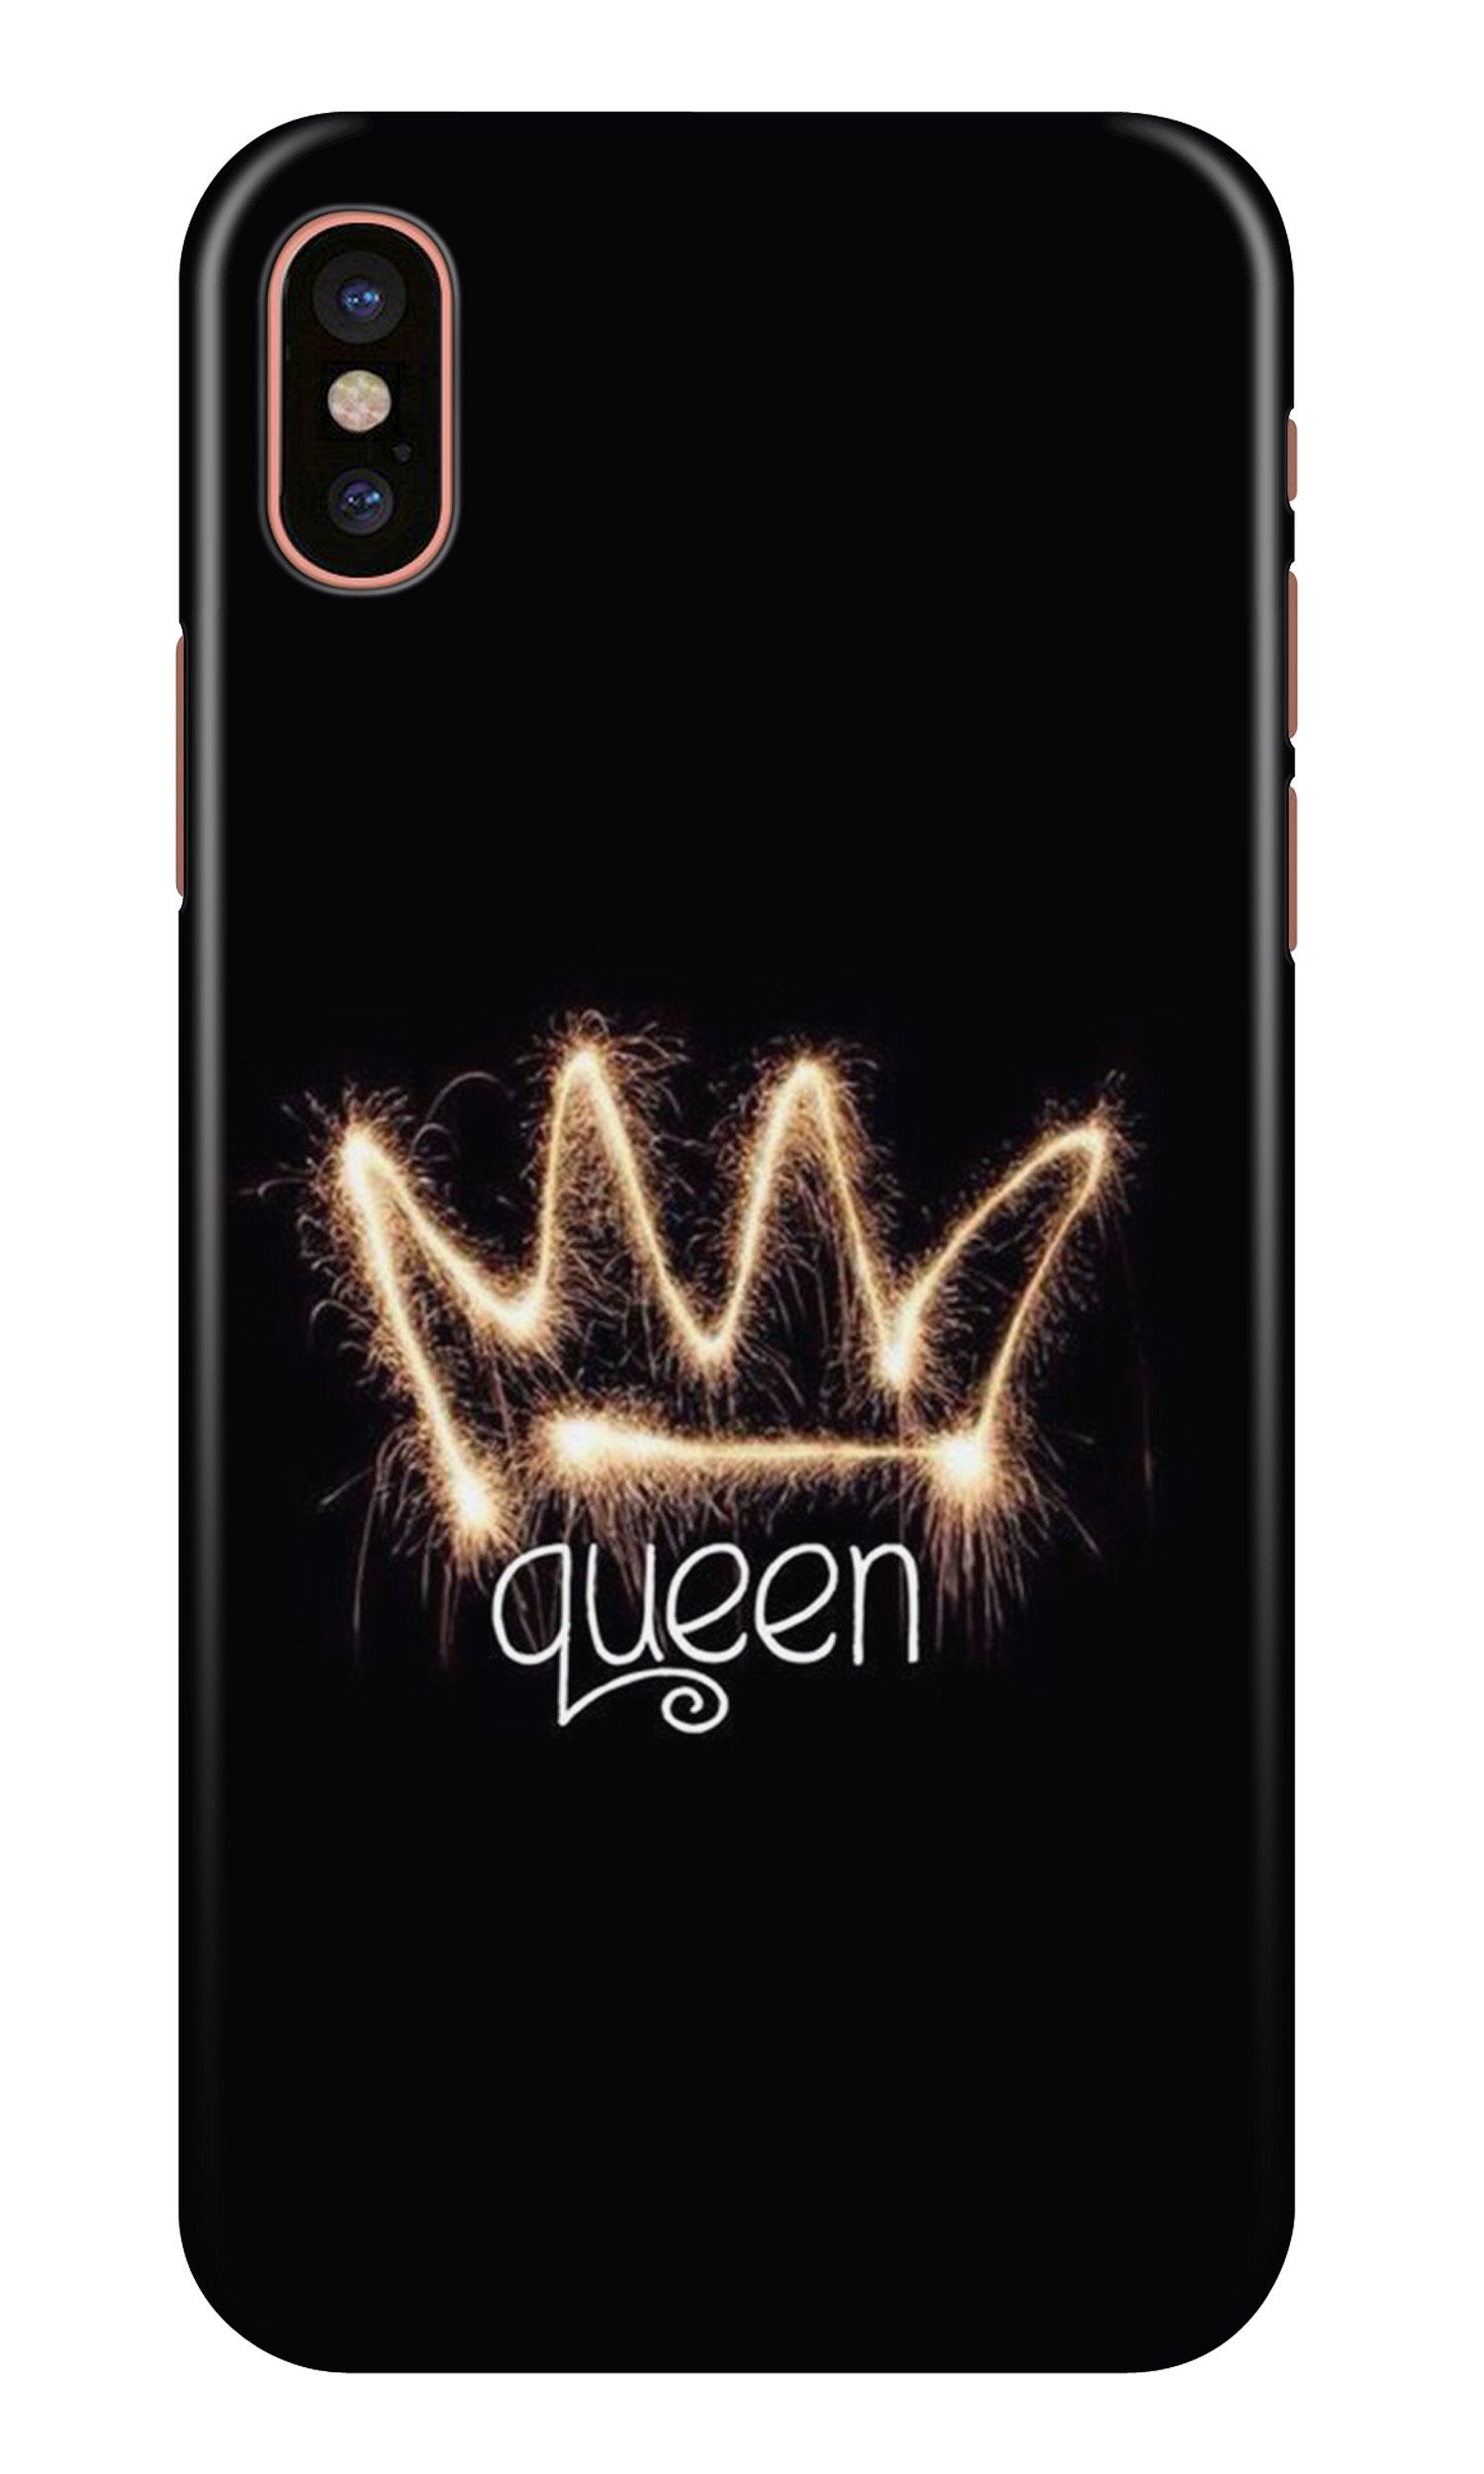 Queen Case for iPhone X (Design No. 270)